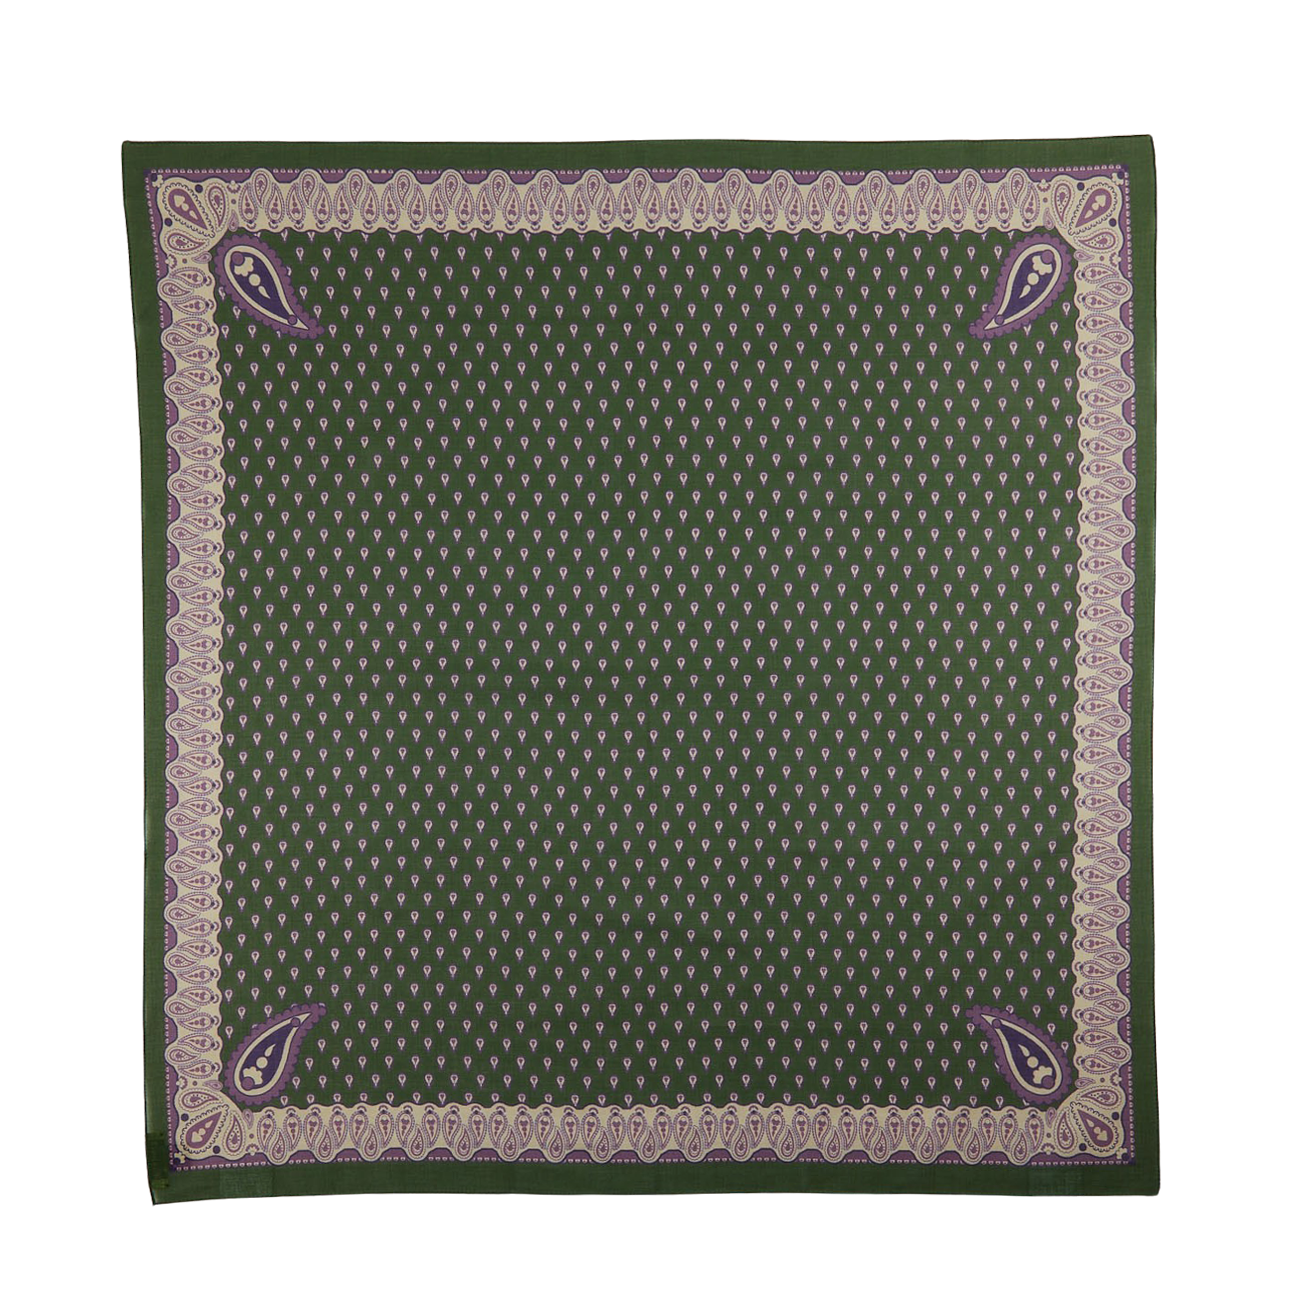 Pine Green Paisley Cotton Voile Bandana by De Bonne Facture, with a decorative border, featuring a symmetrical pattern and four large paisley motifs at each corner.